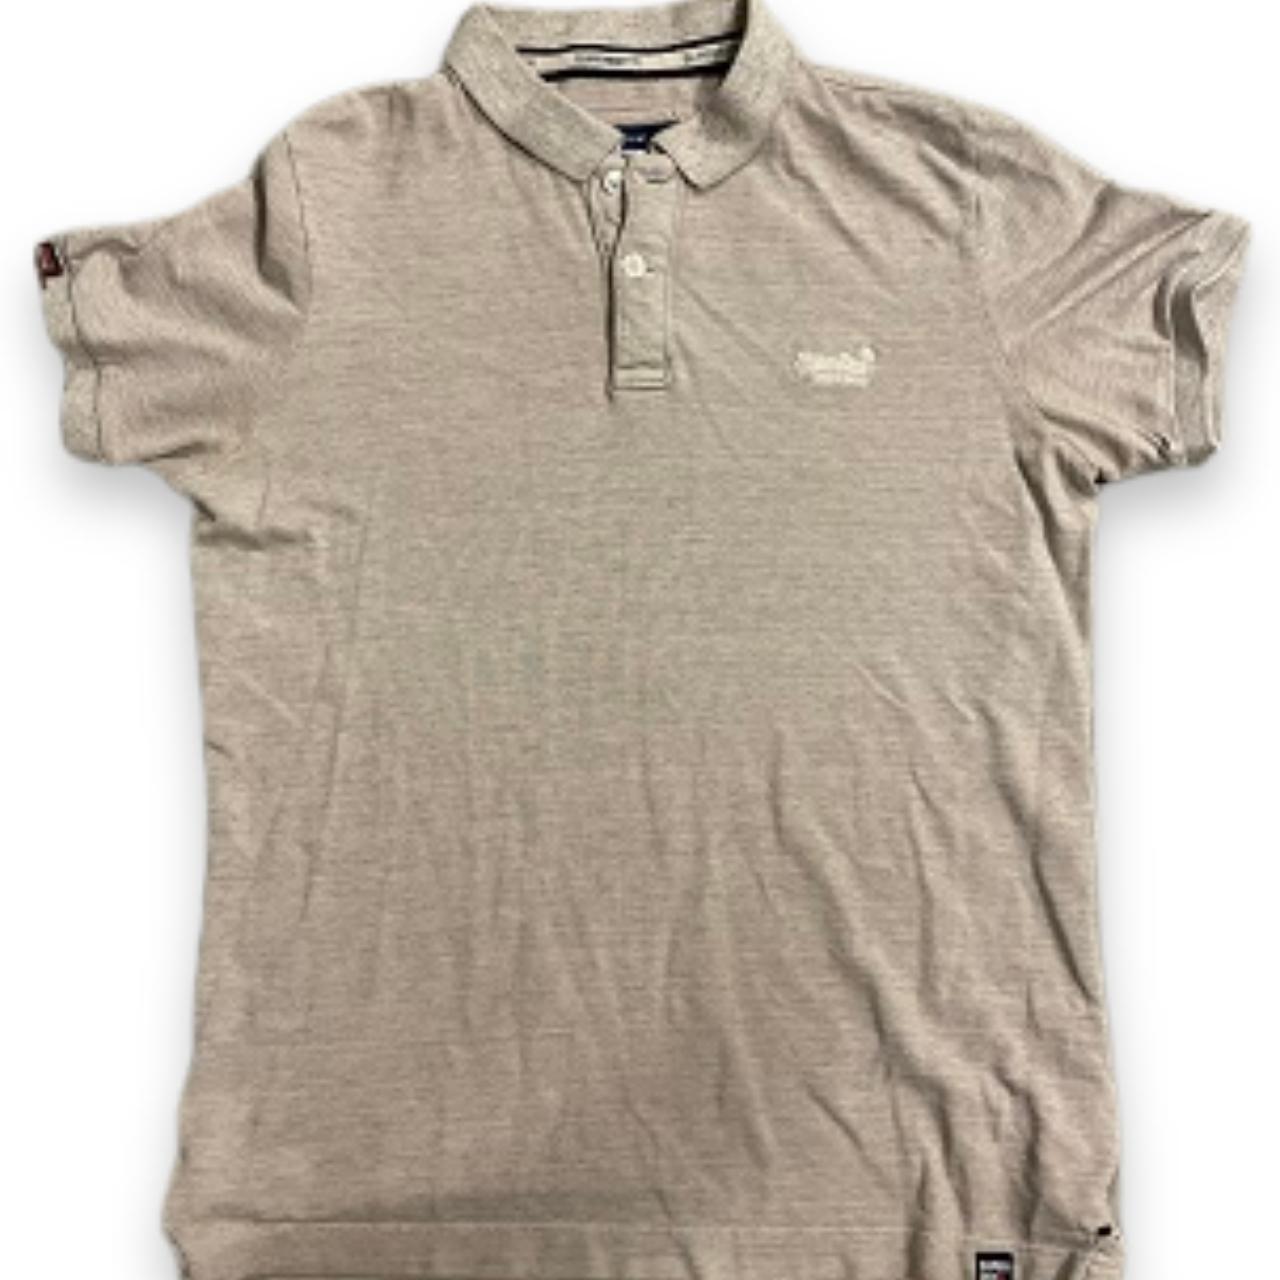 Vintage Mens Superdry premium grey polo shirt size XL